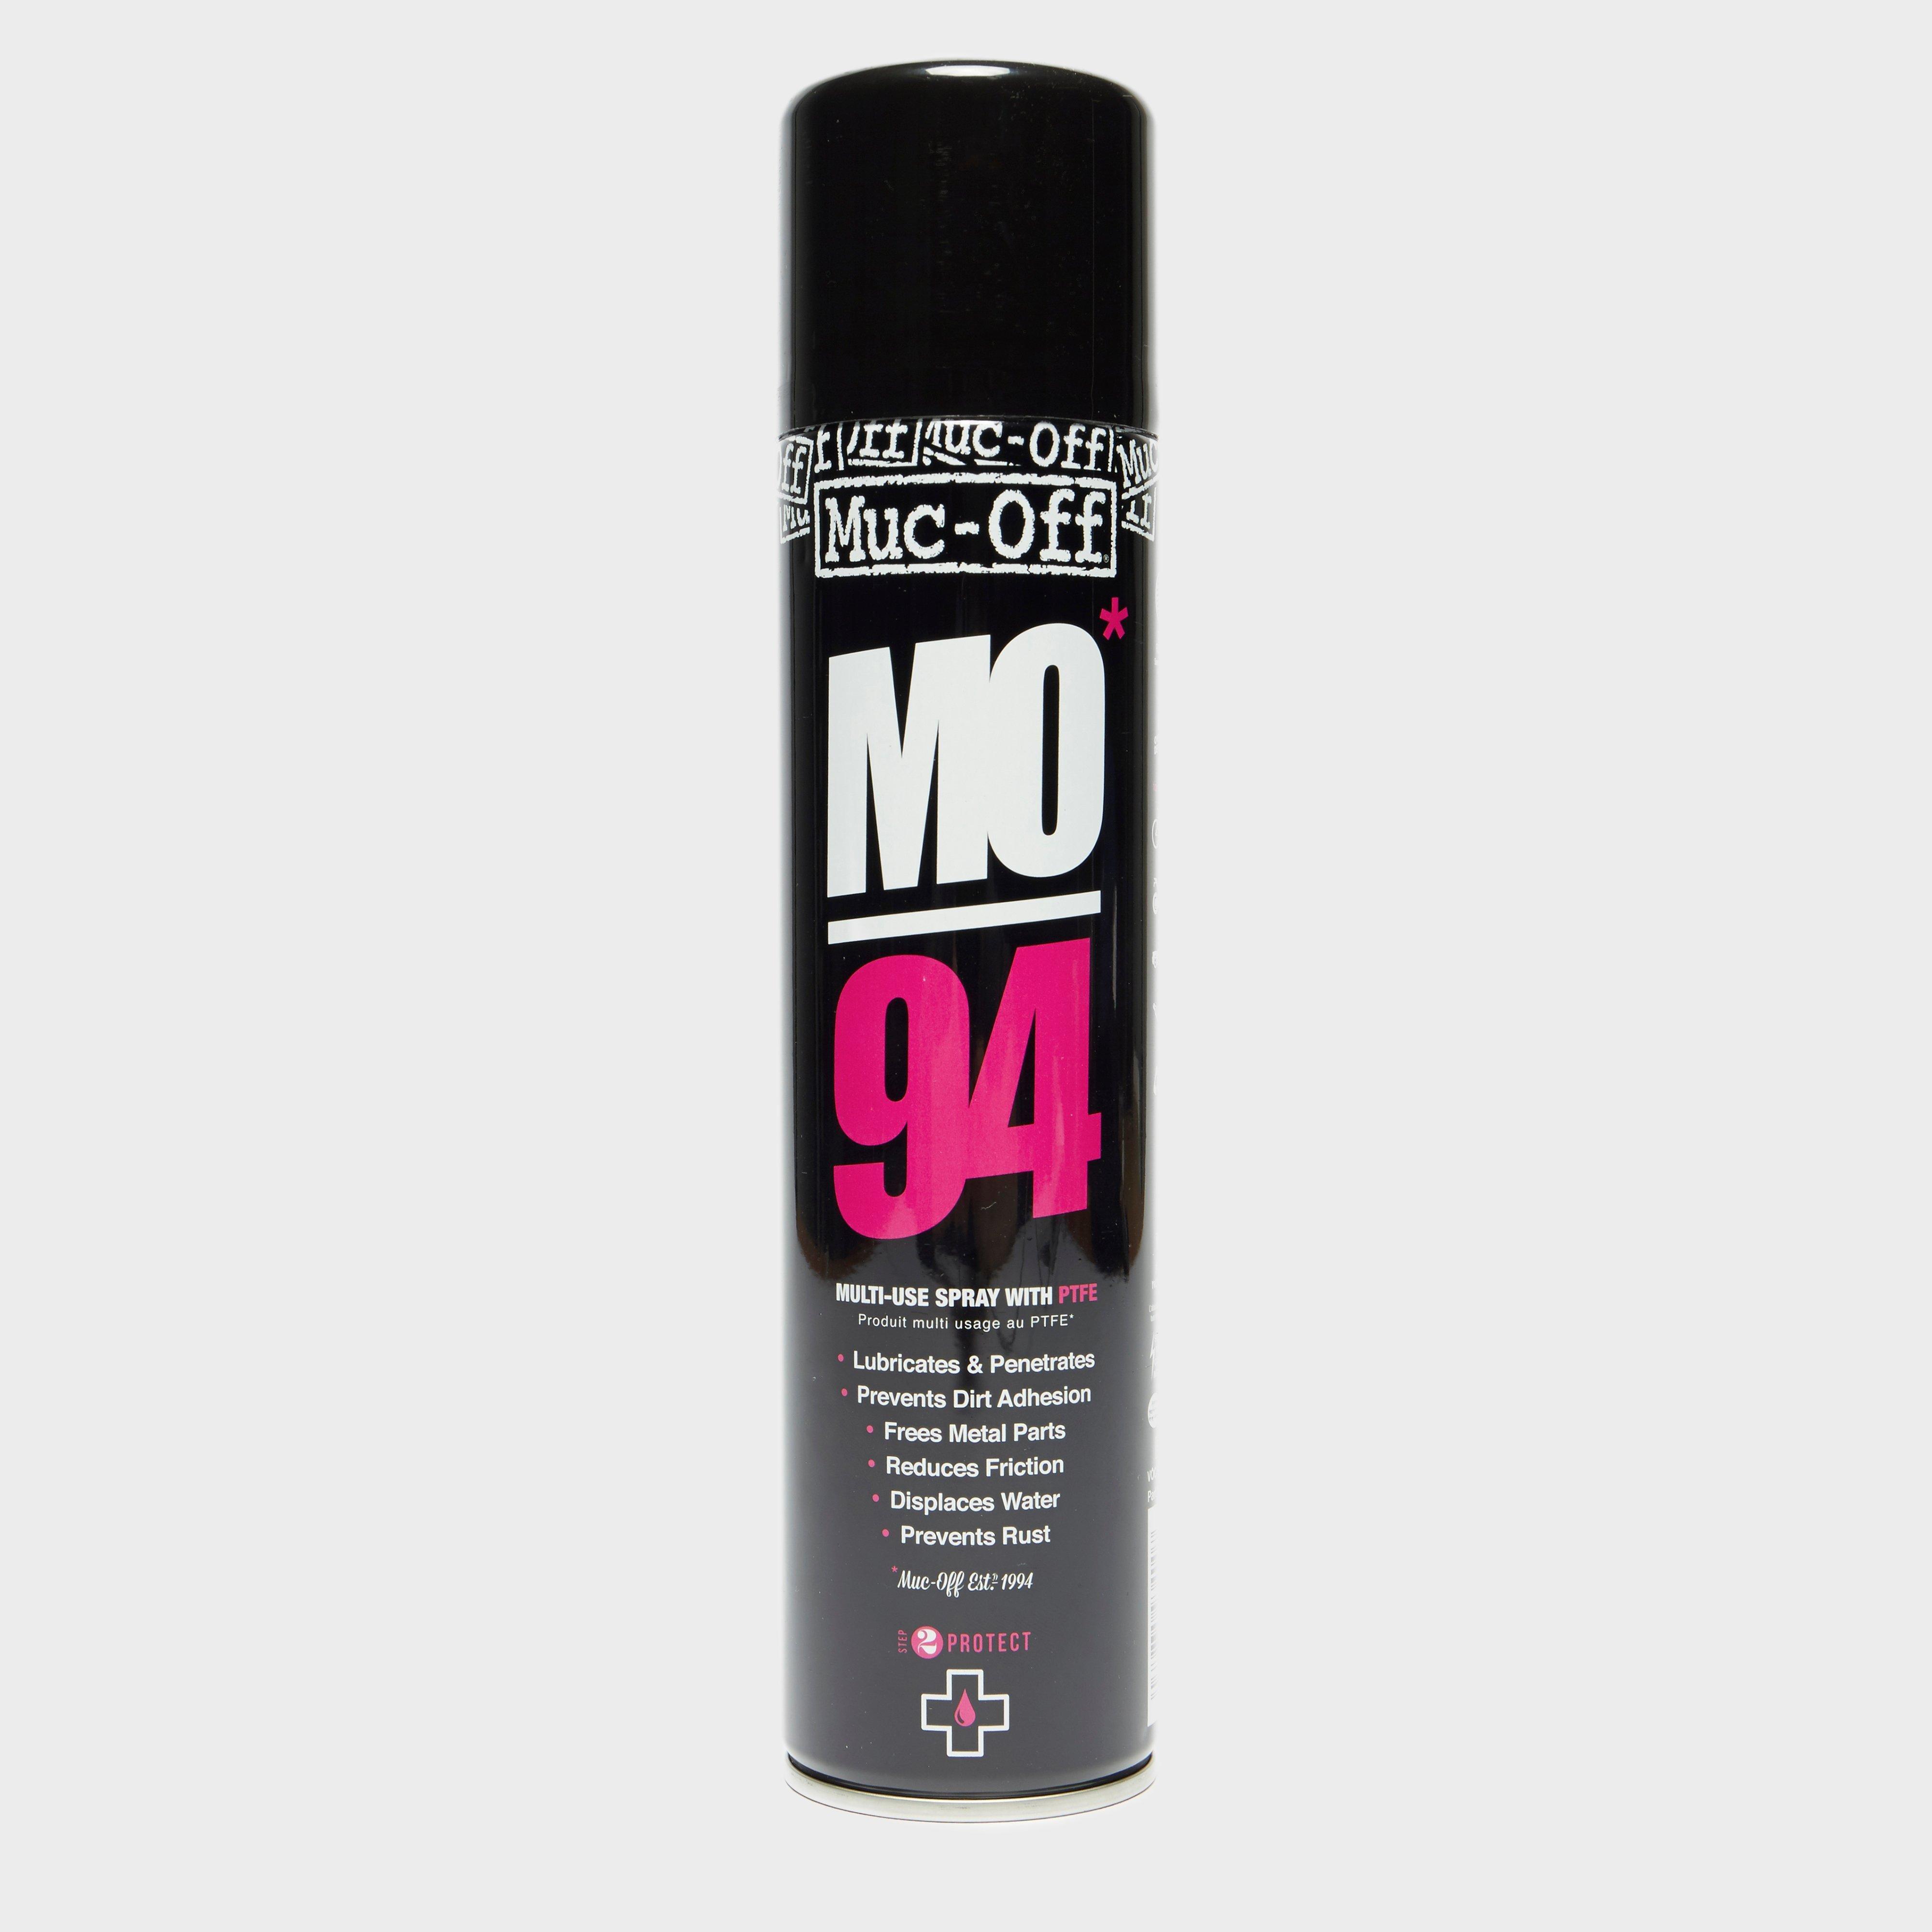 Go Outdoors Muc Off Muc-off M094 Spray, Black